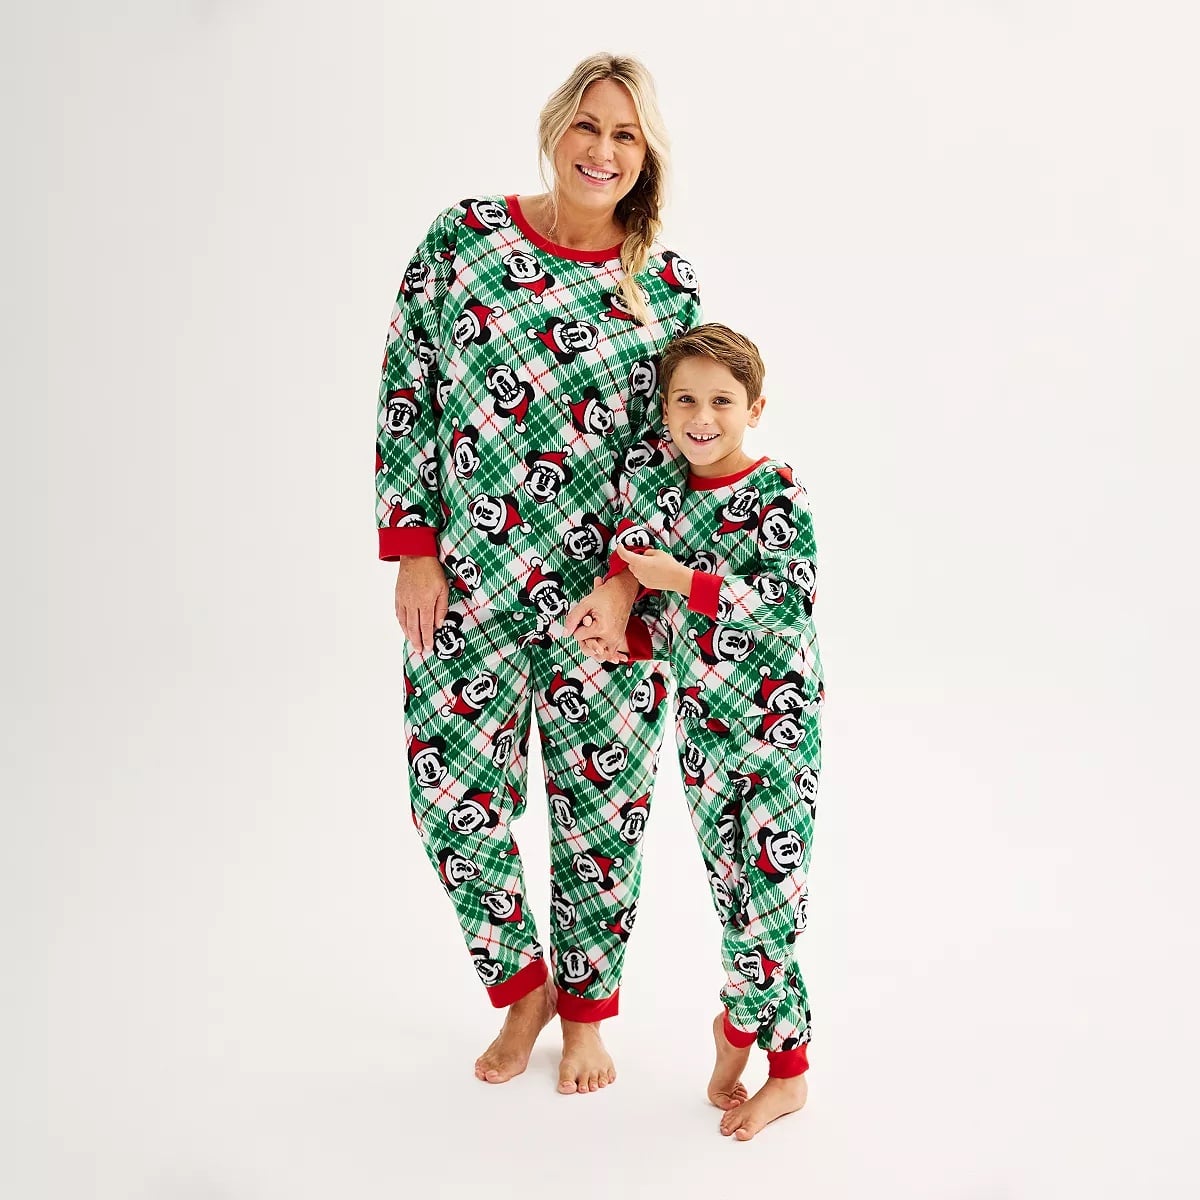 Shopping Matching Holiday Pajamas at Kohl's - City Girl Gone Mom